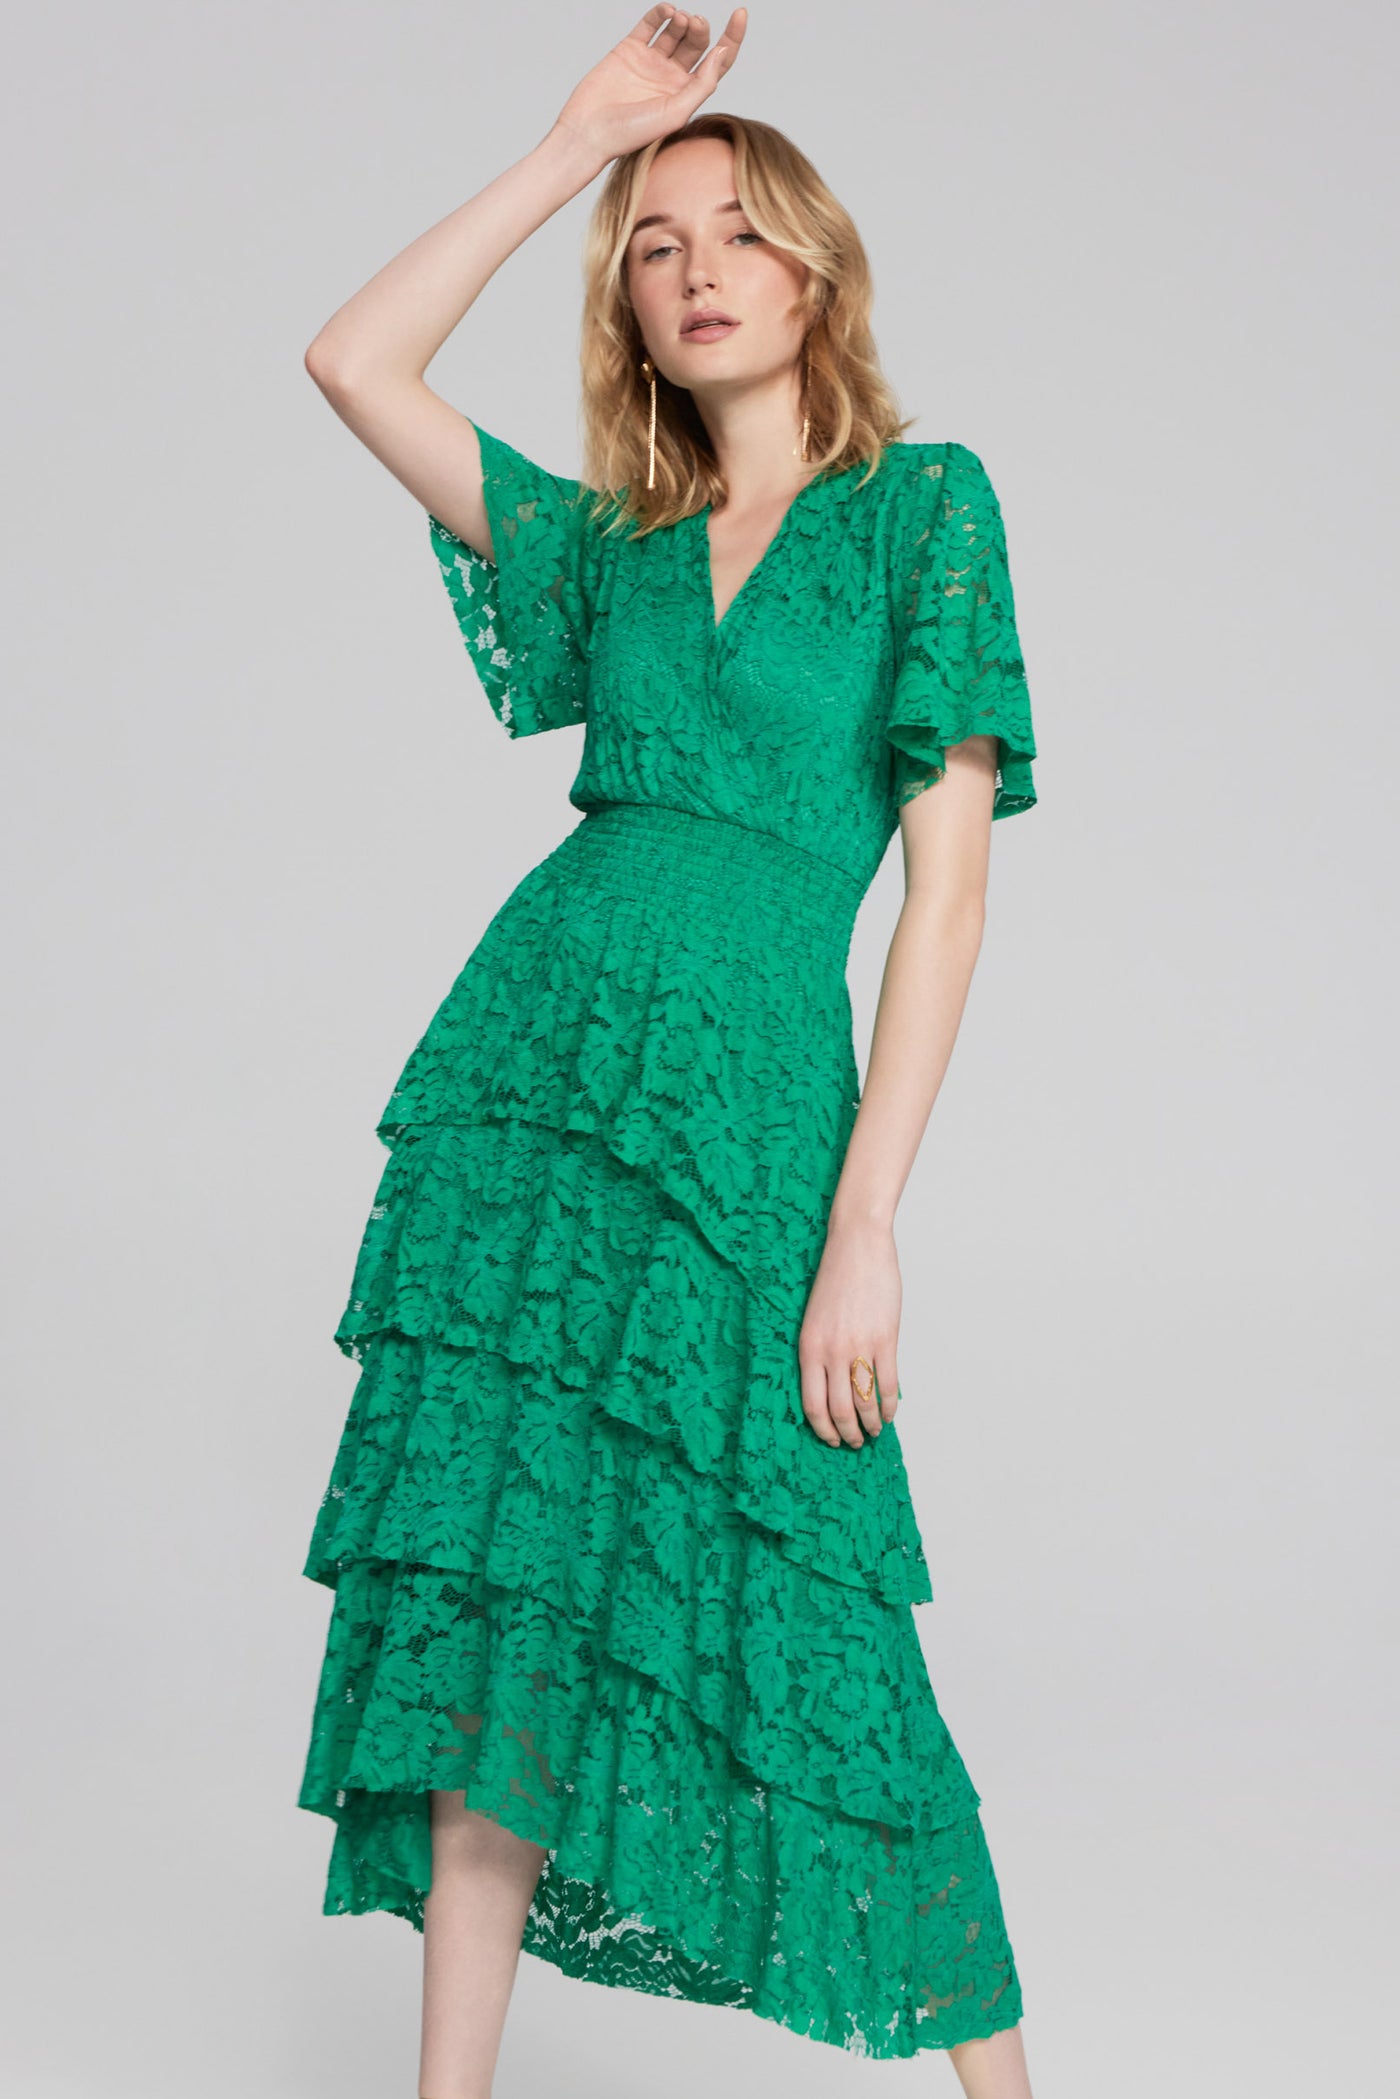 Joseph Ribkoff Noble Green Lace Ruffled A-Line Dress